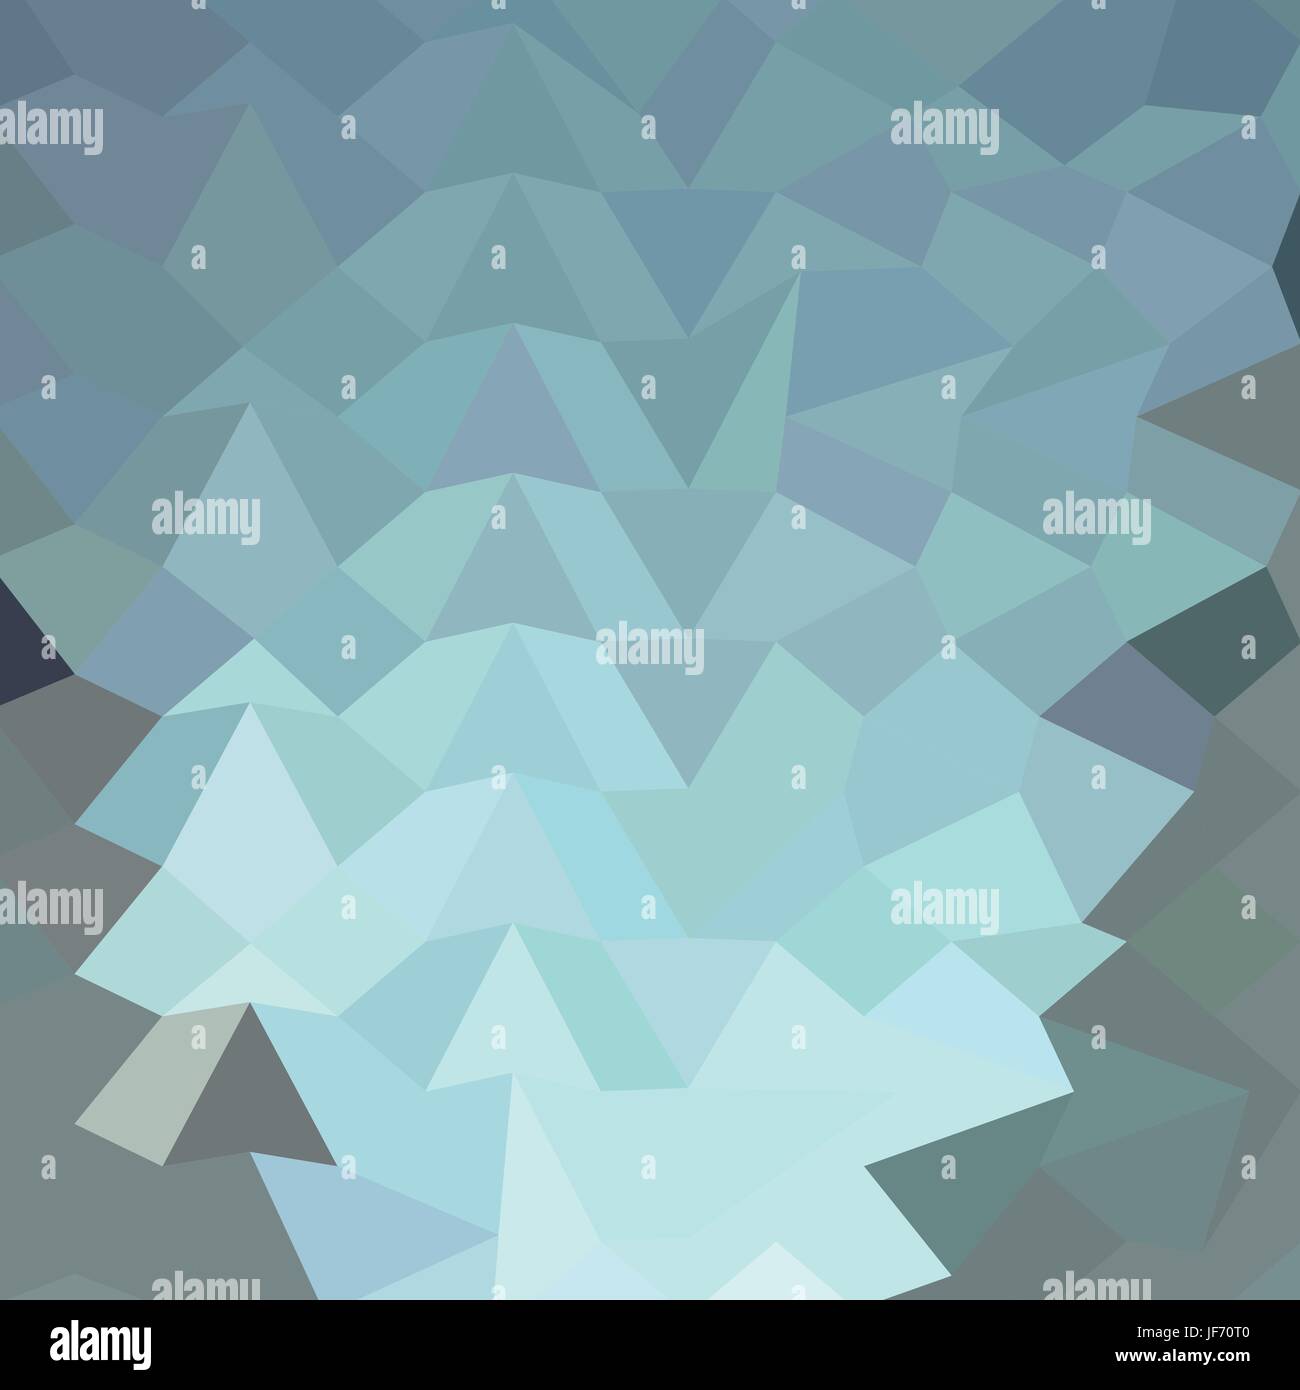 Cambridge-blaue abstrakte niedrige Polygon-Hintergrund Stock Vektor